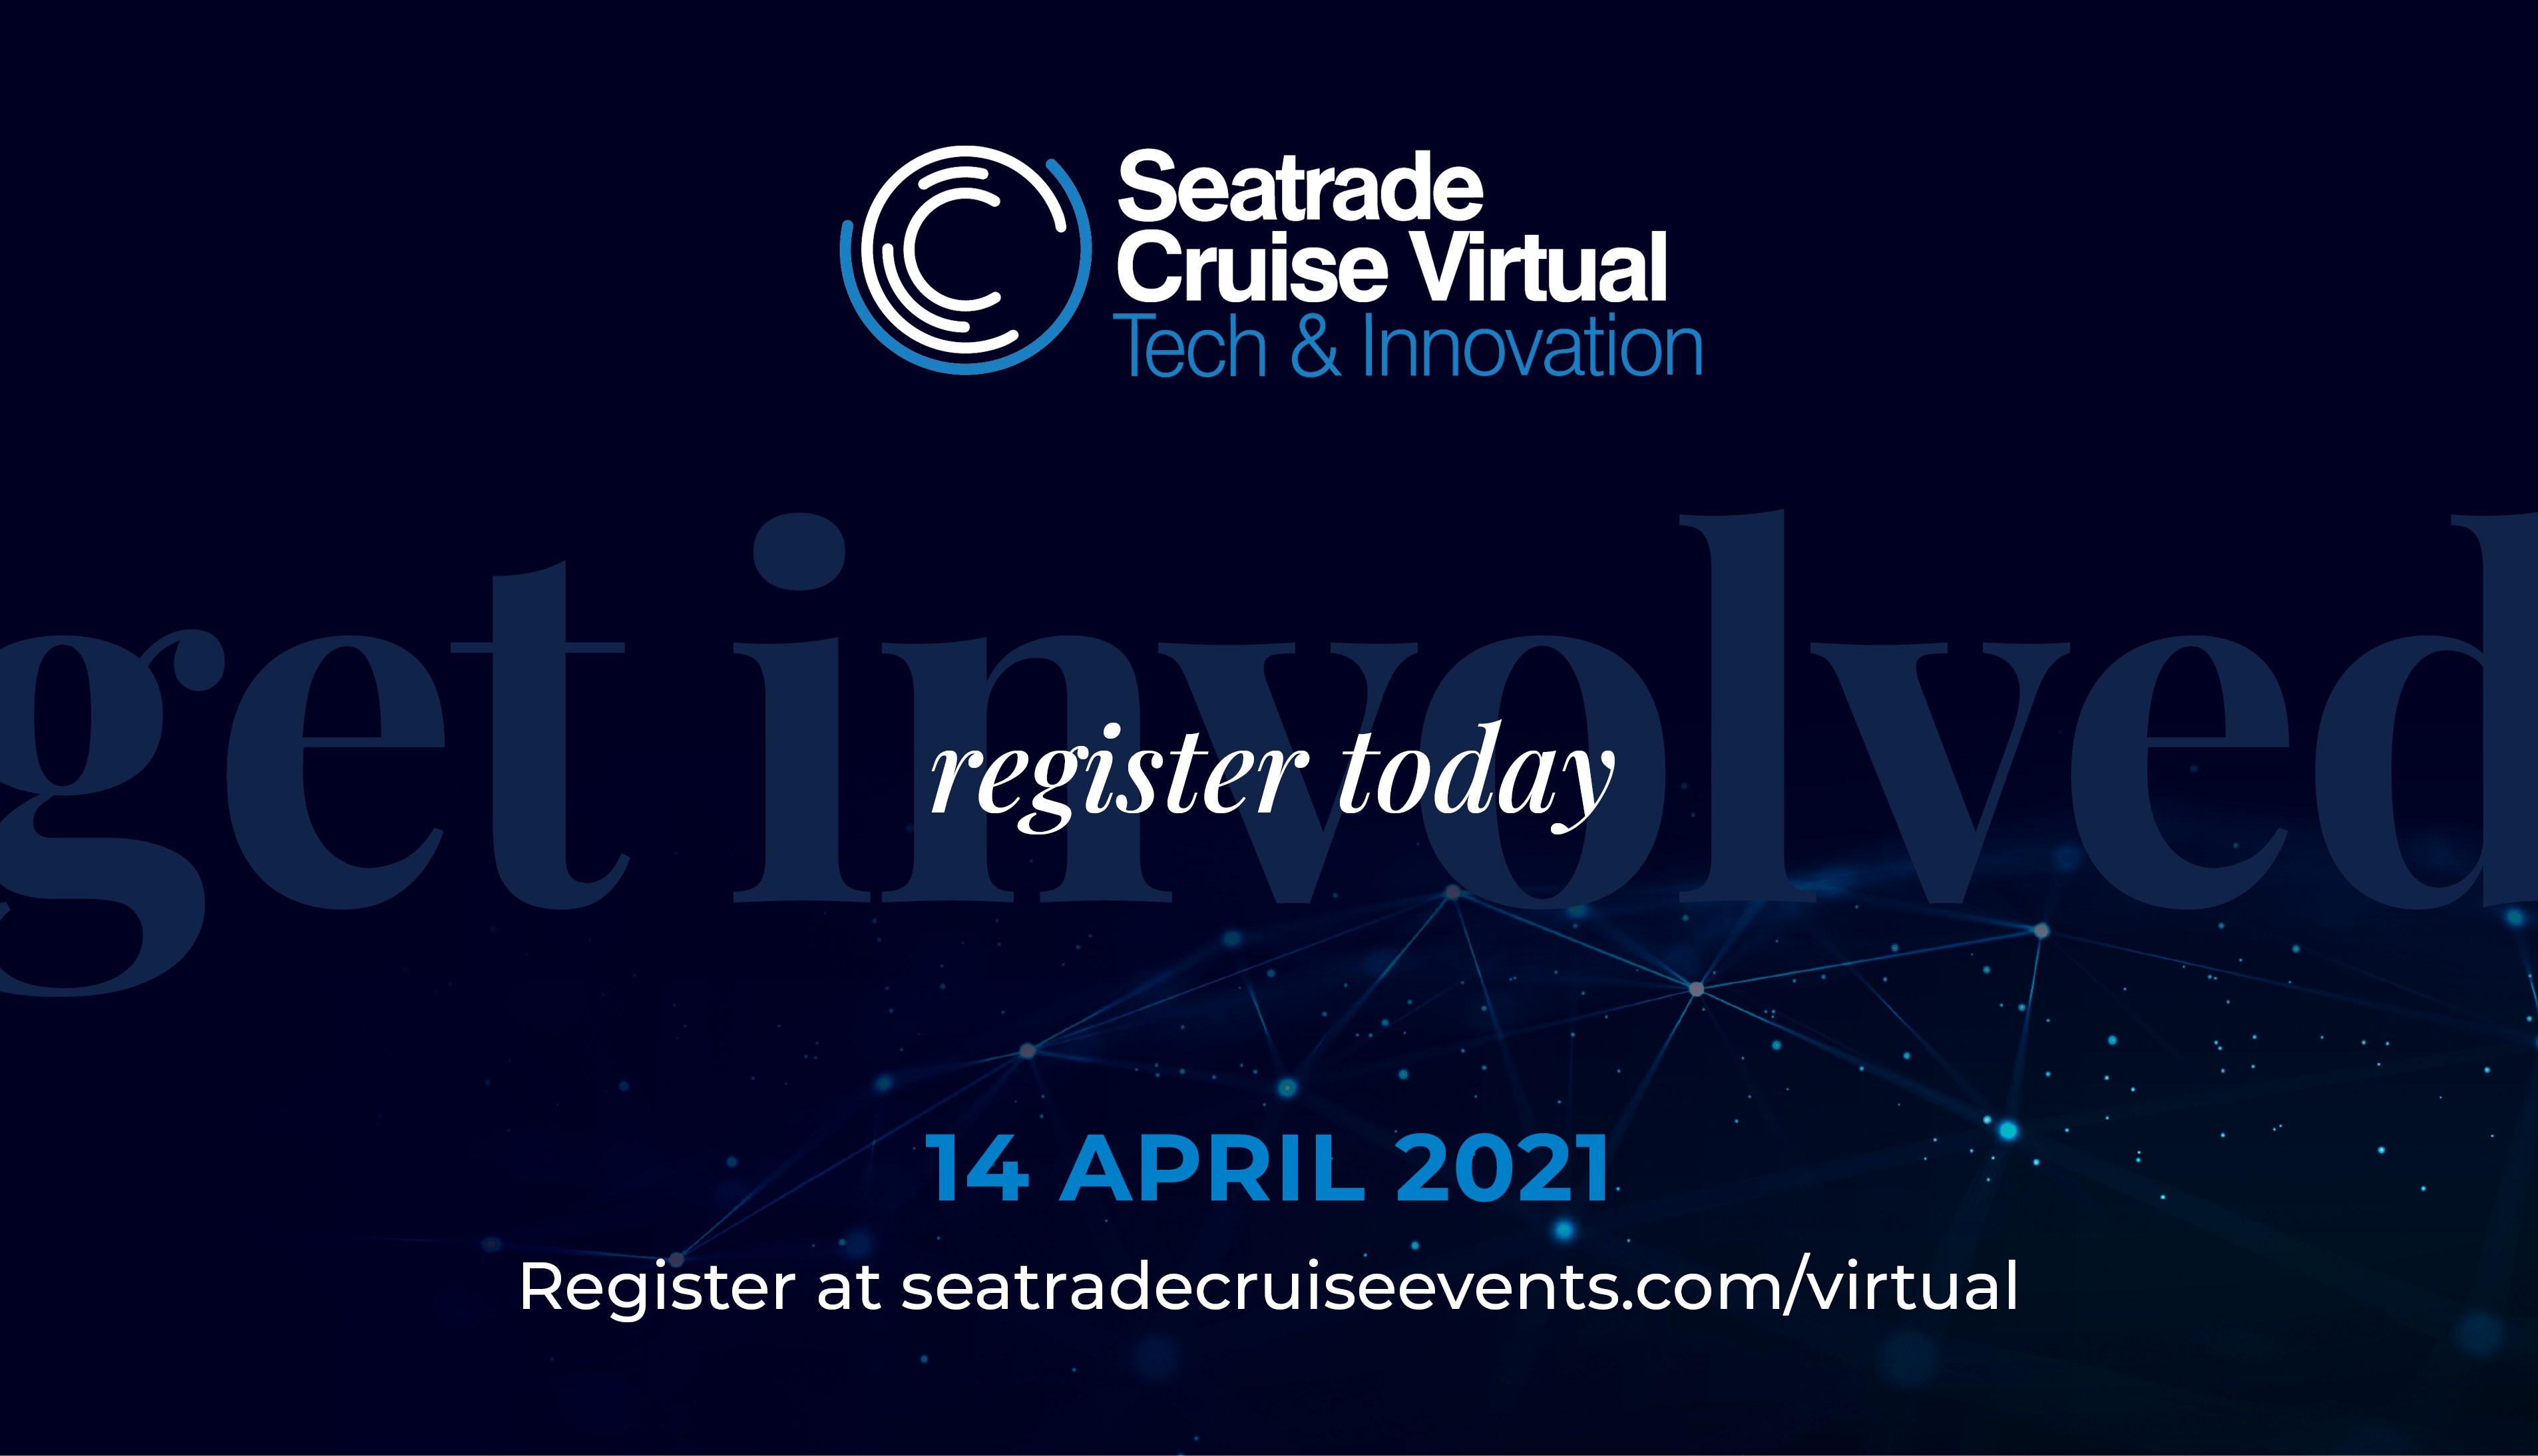 Seatrade Cruise Virtual: Tech & Innovation, April 2021